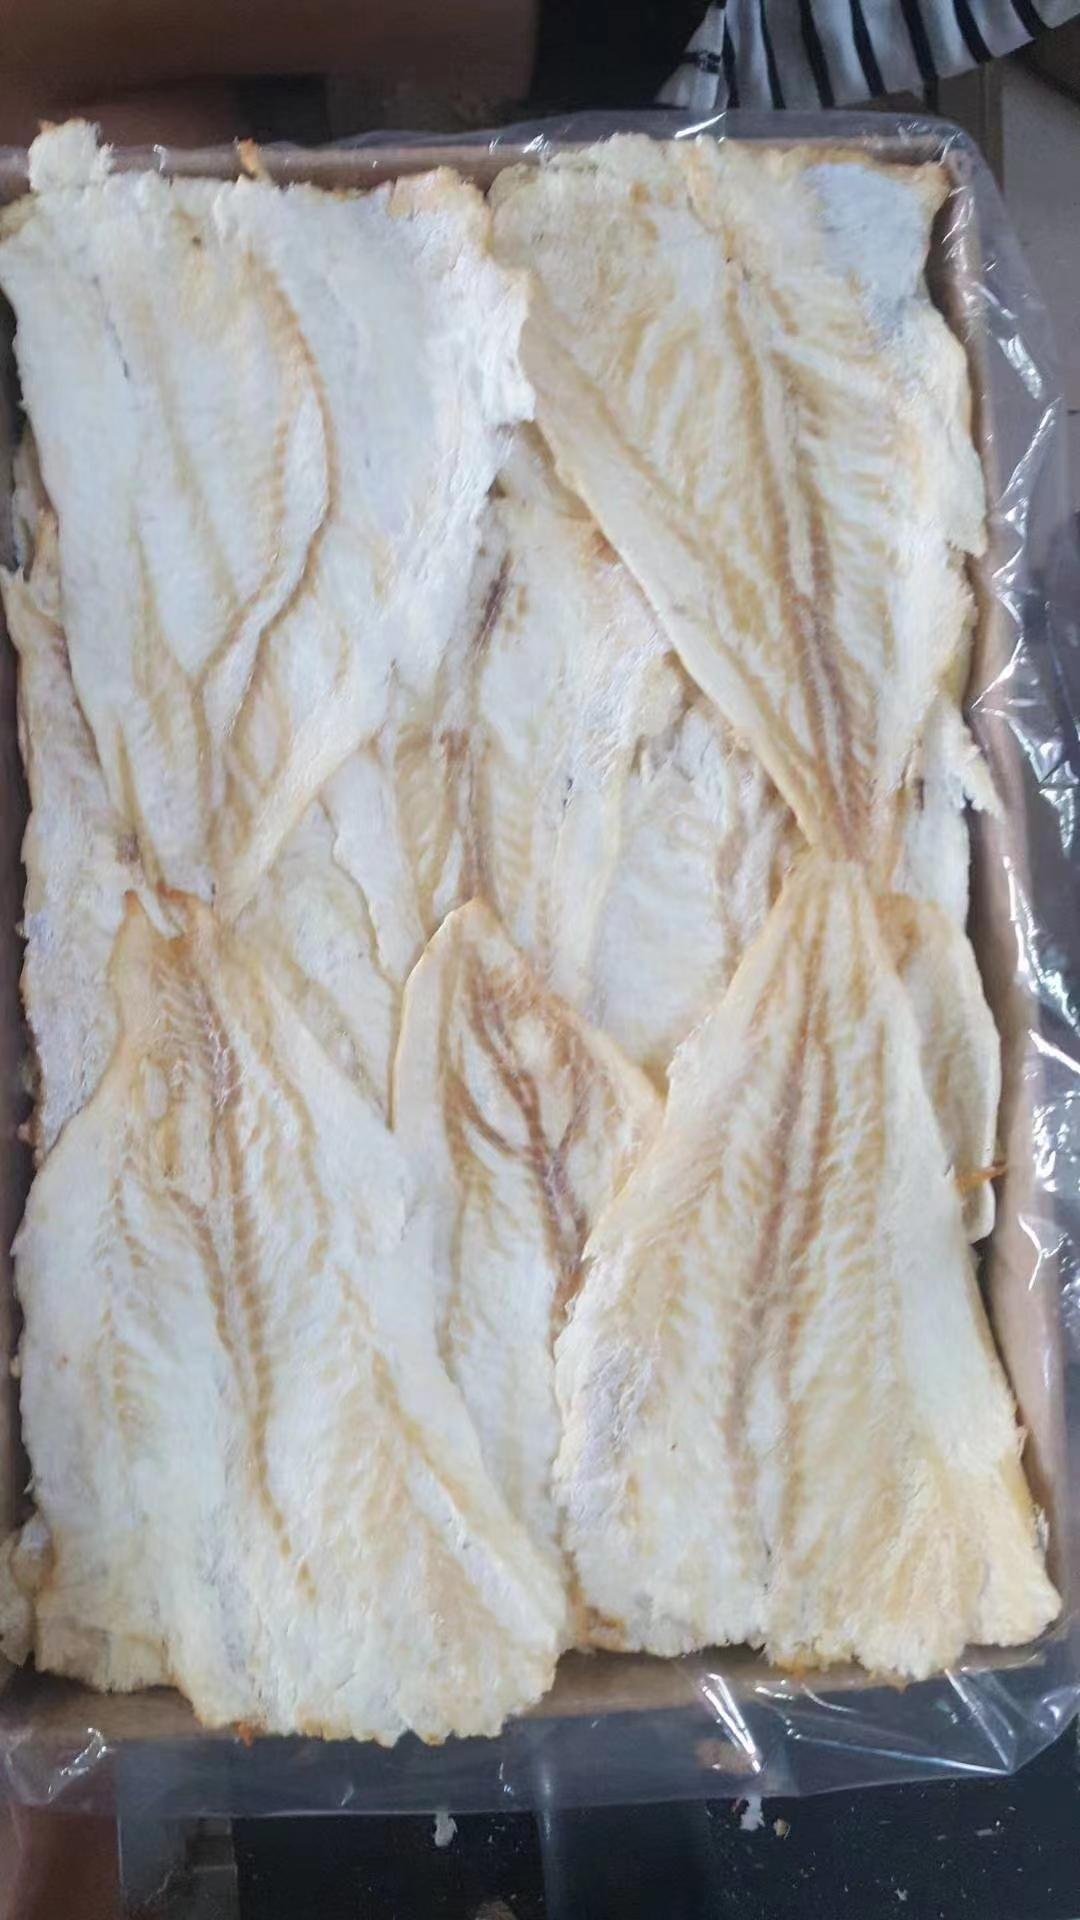 Dried cod fish pollock fillet snacks